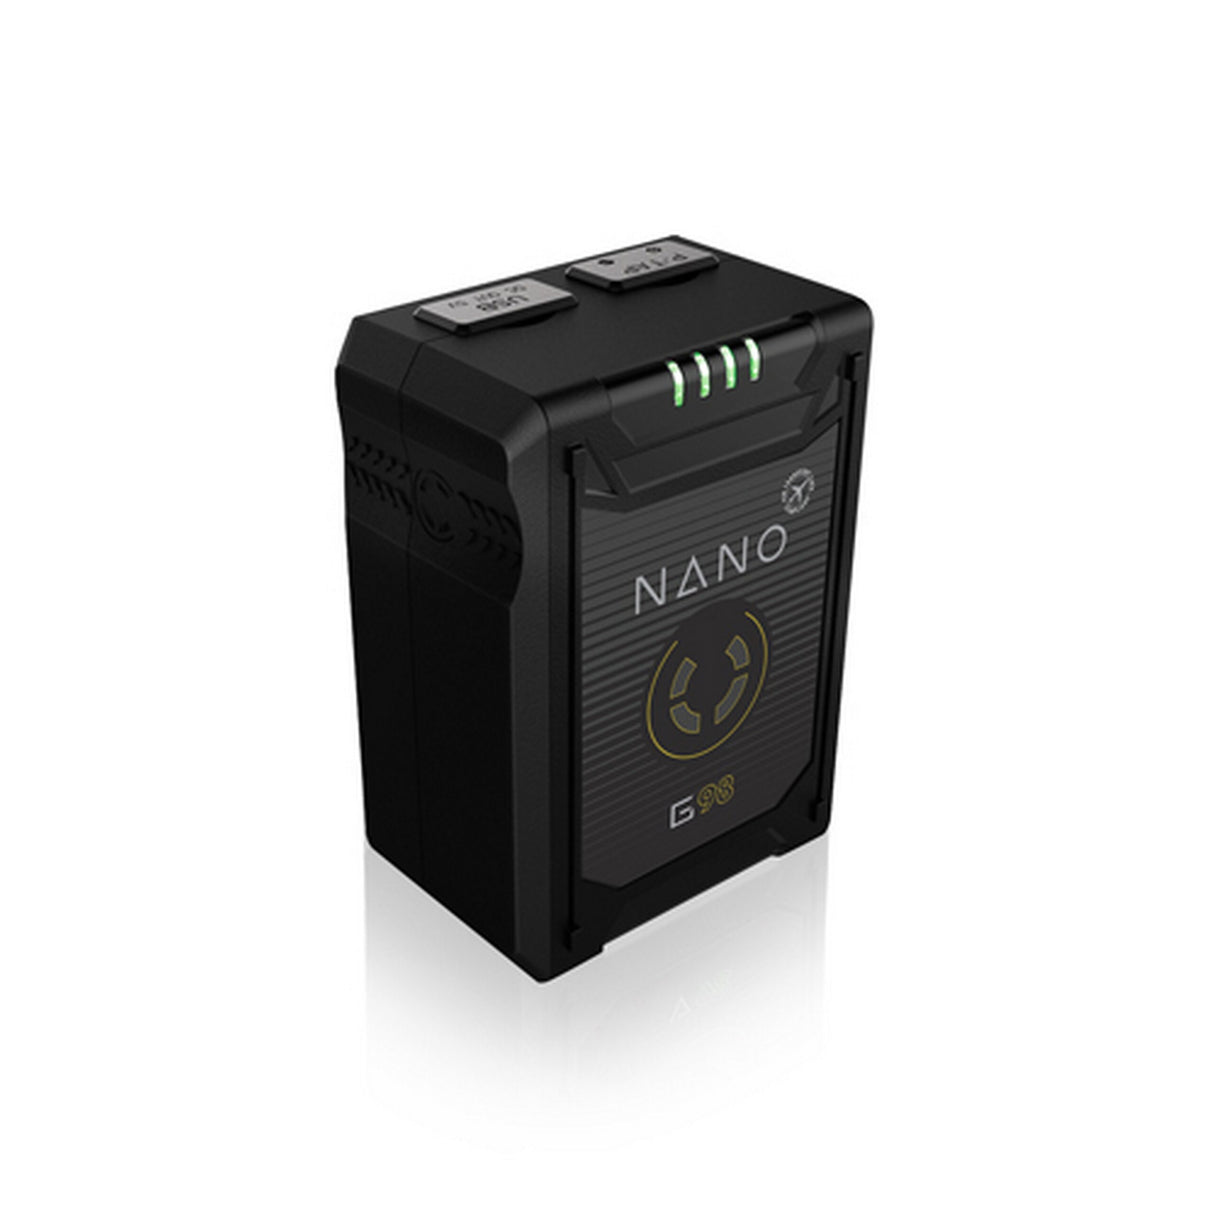 Core SWX NANO-G98 Micro Gold-Mount Battery Pack